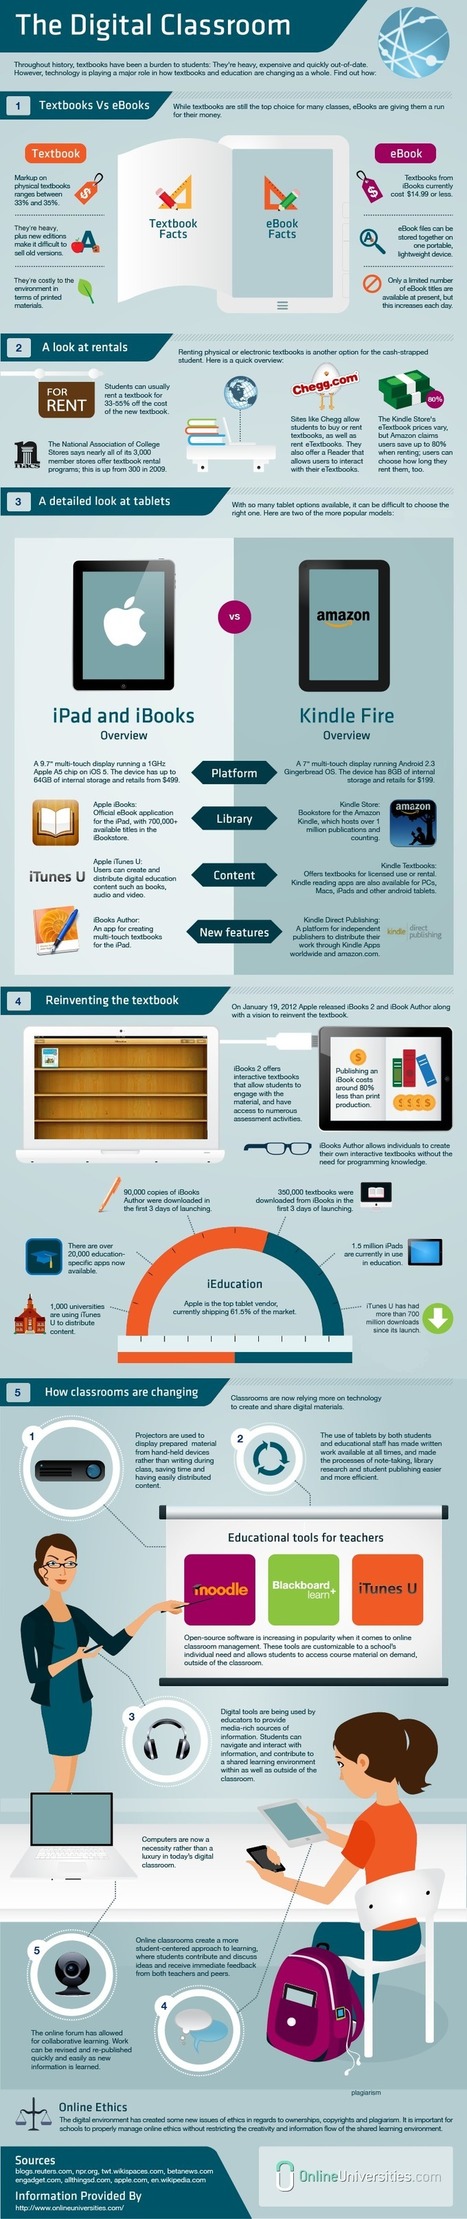 The Elements Of A Digital Classroom [Infographic] | Pedalogica: educación y TIC | Scoop.it